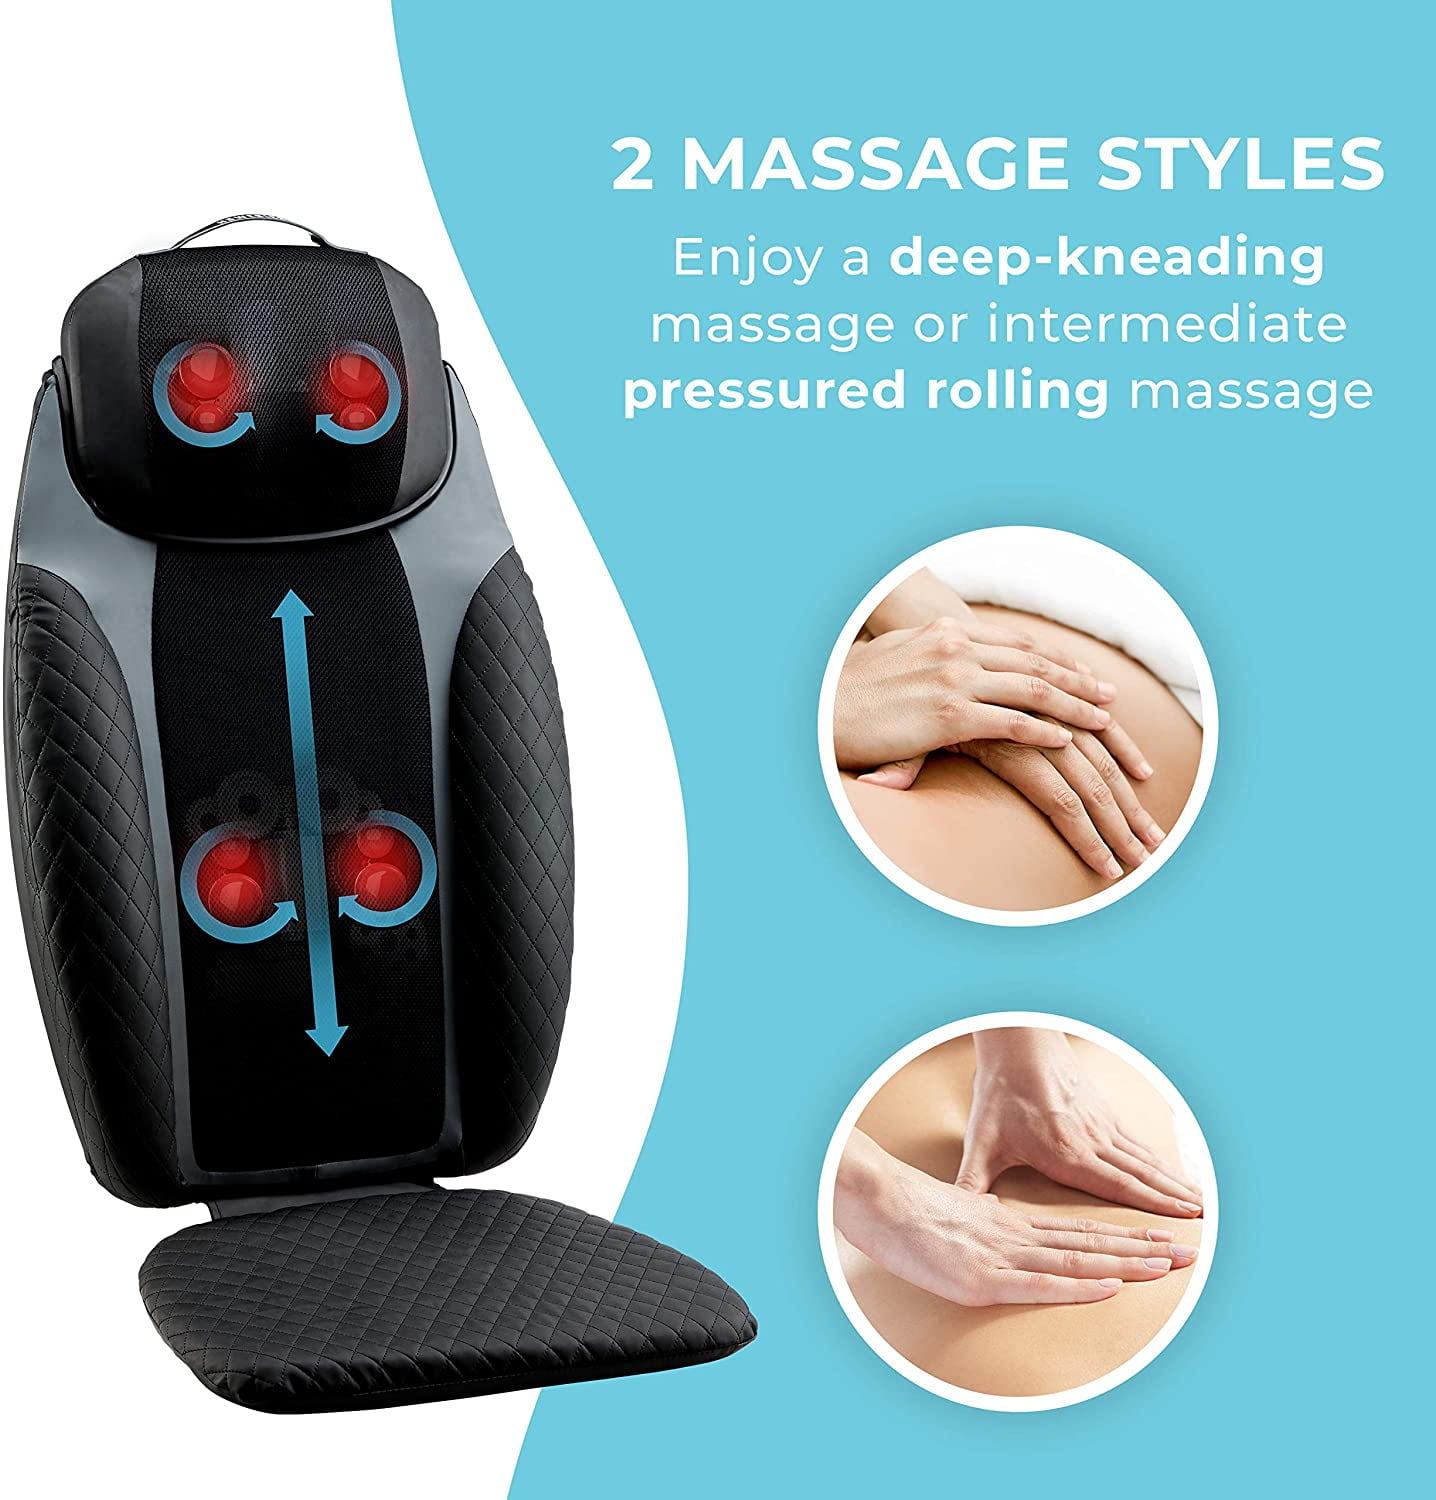 MedicPure Portable Shiatsu Heated Massage Seat Cushion - Medicpure